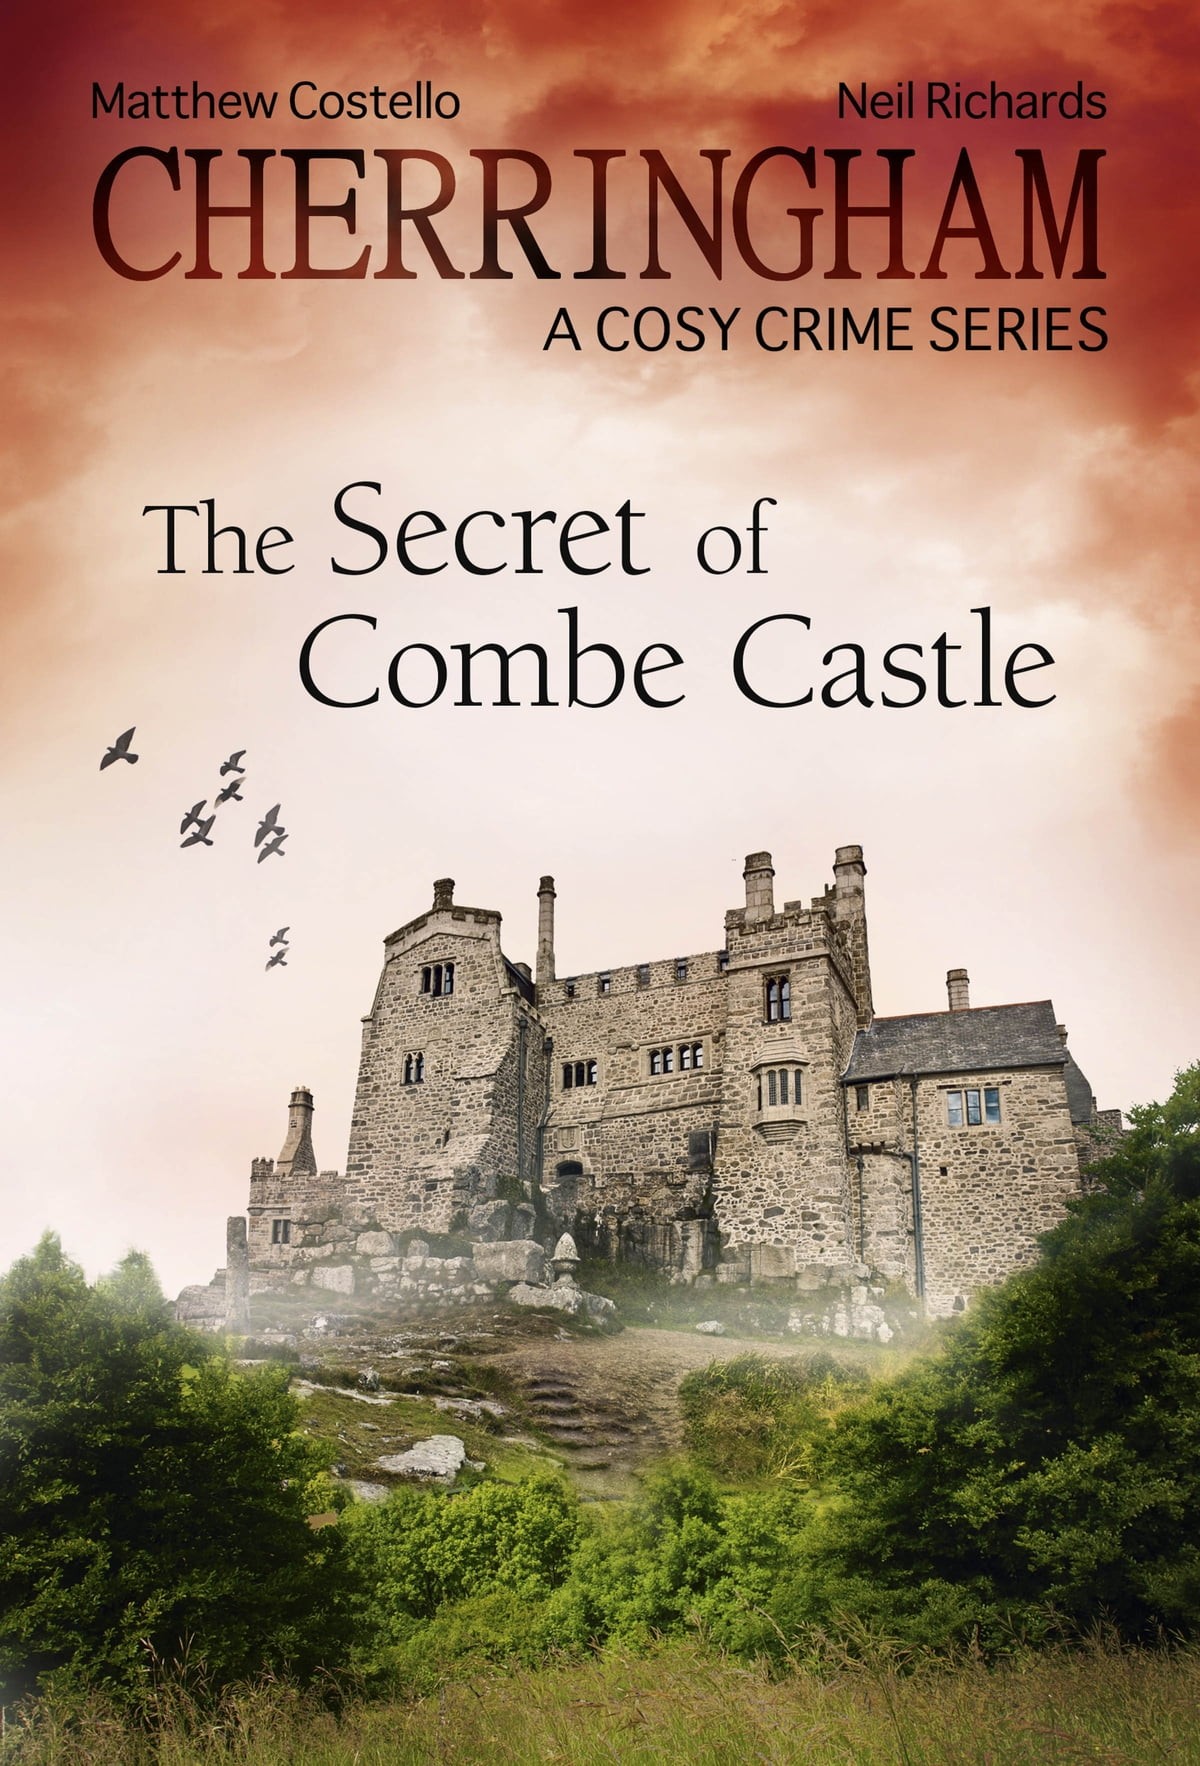 Cherringham - the Secret of Combe Castle: A Cosy Crime Series